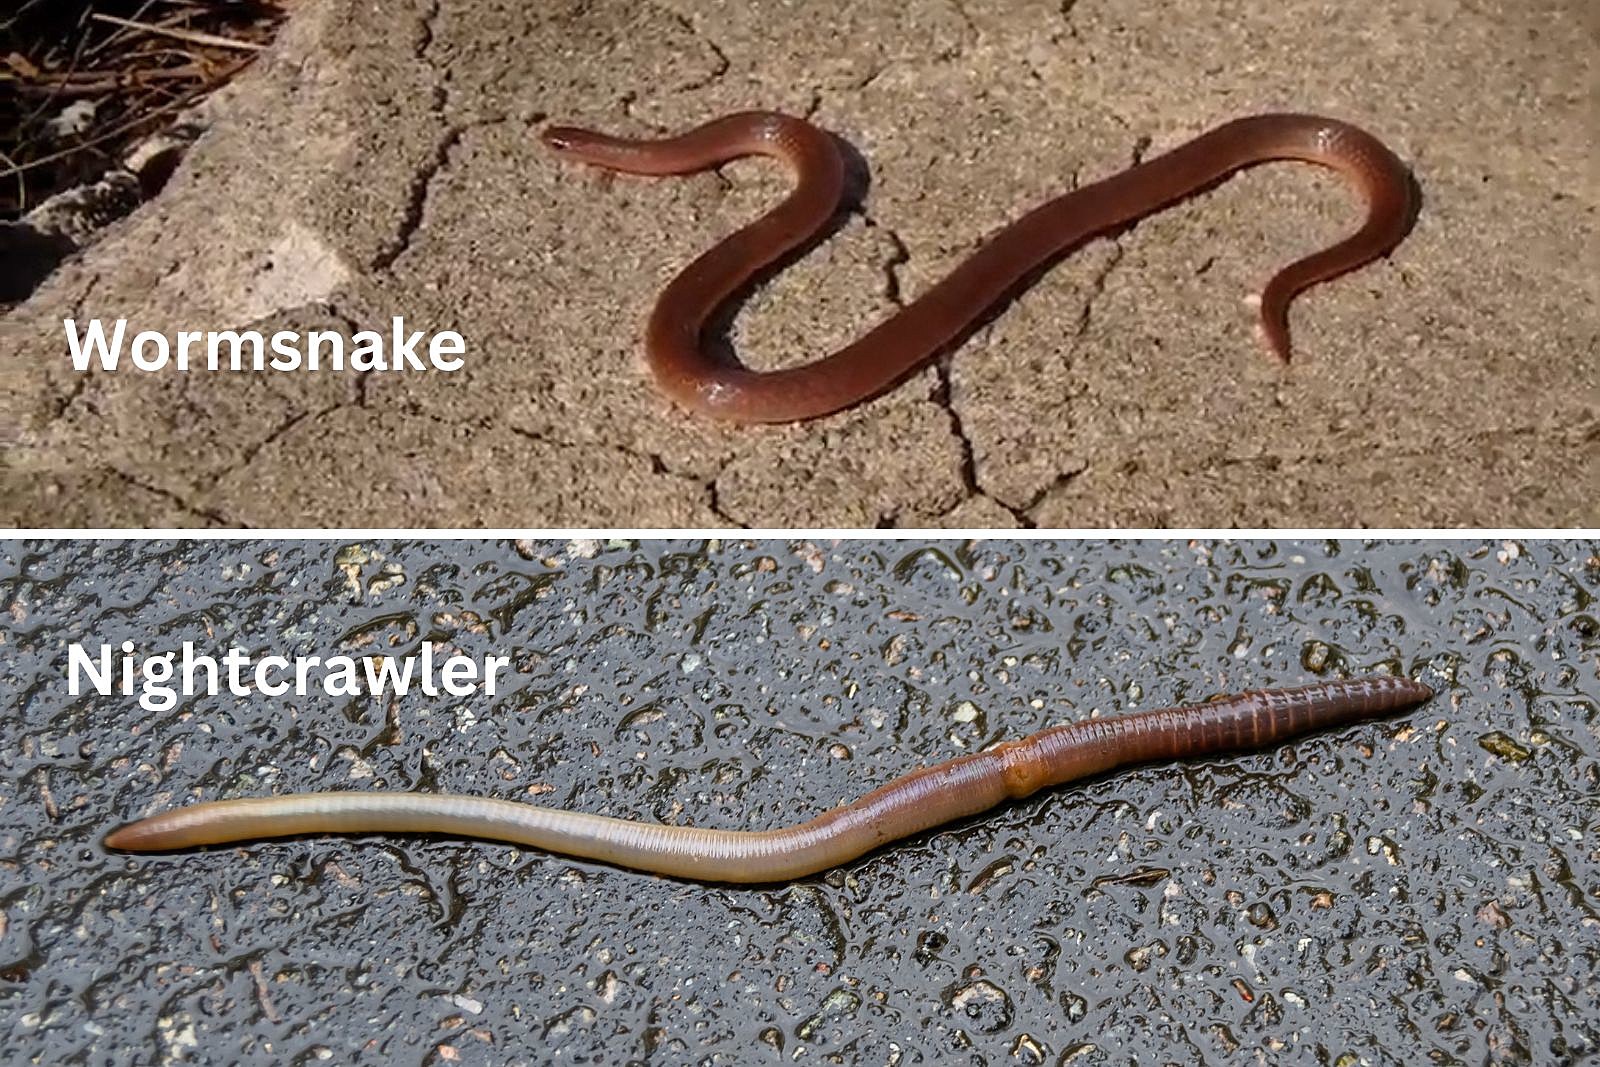 This Indiana Snake Looks Like a Nightcrawler